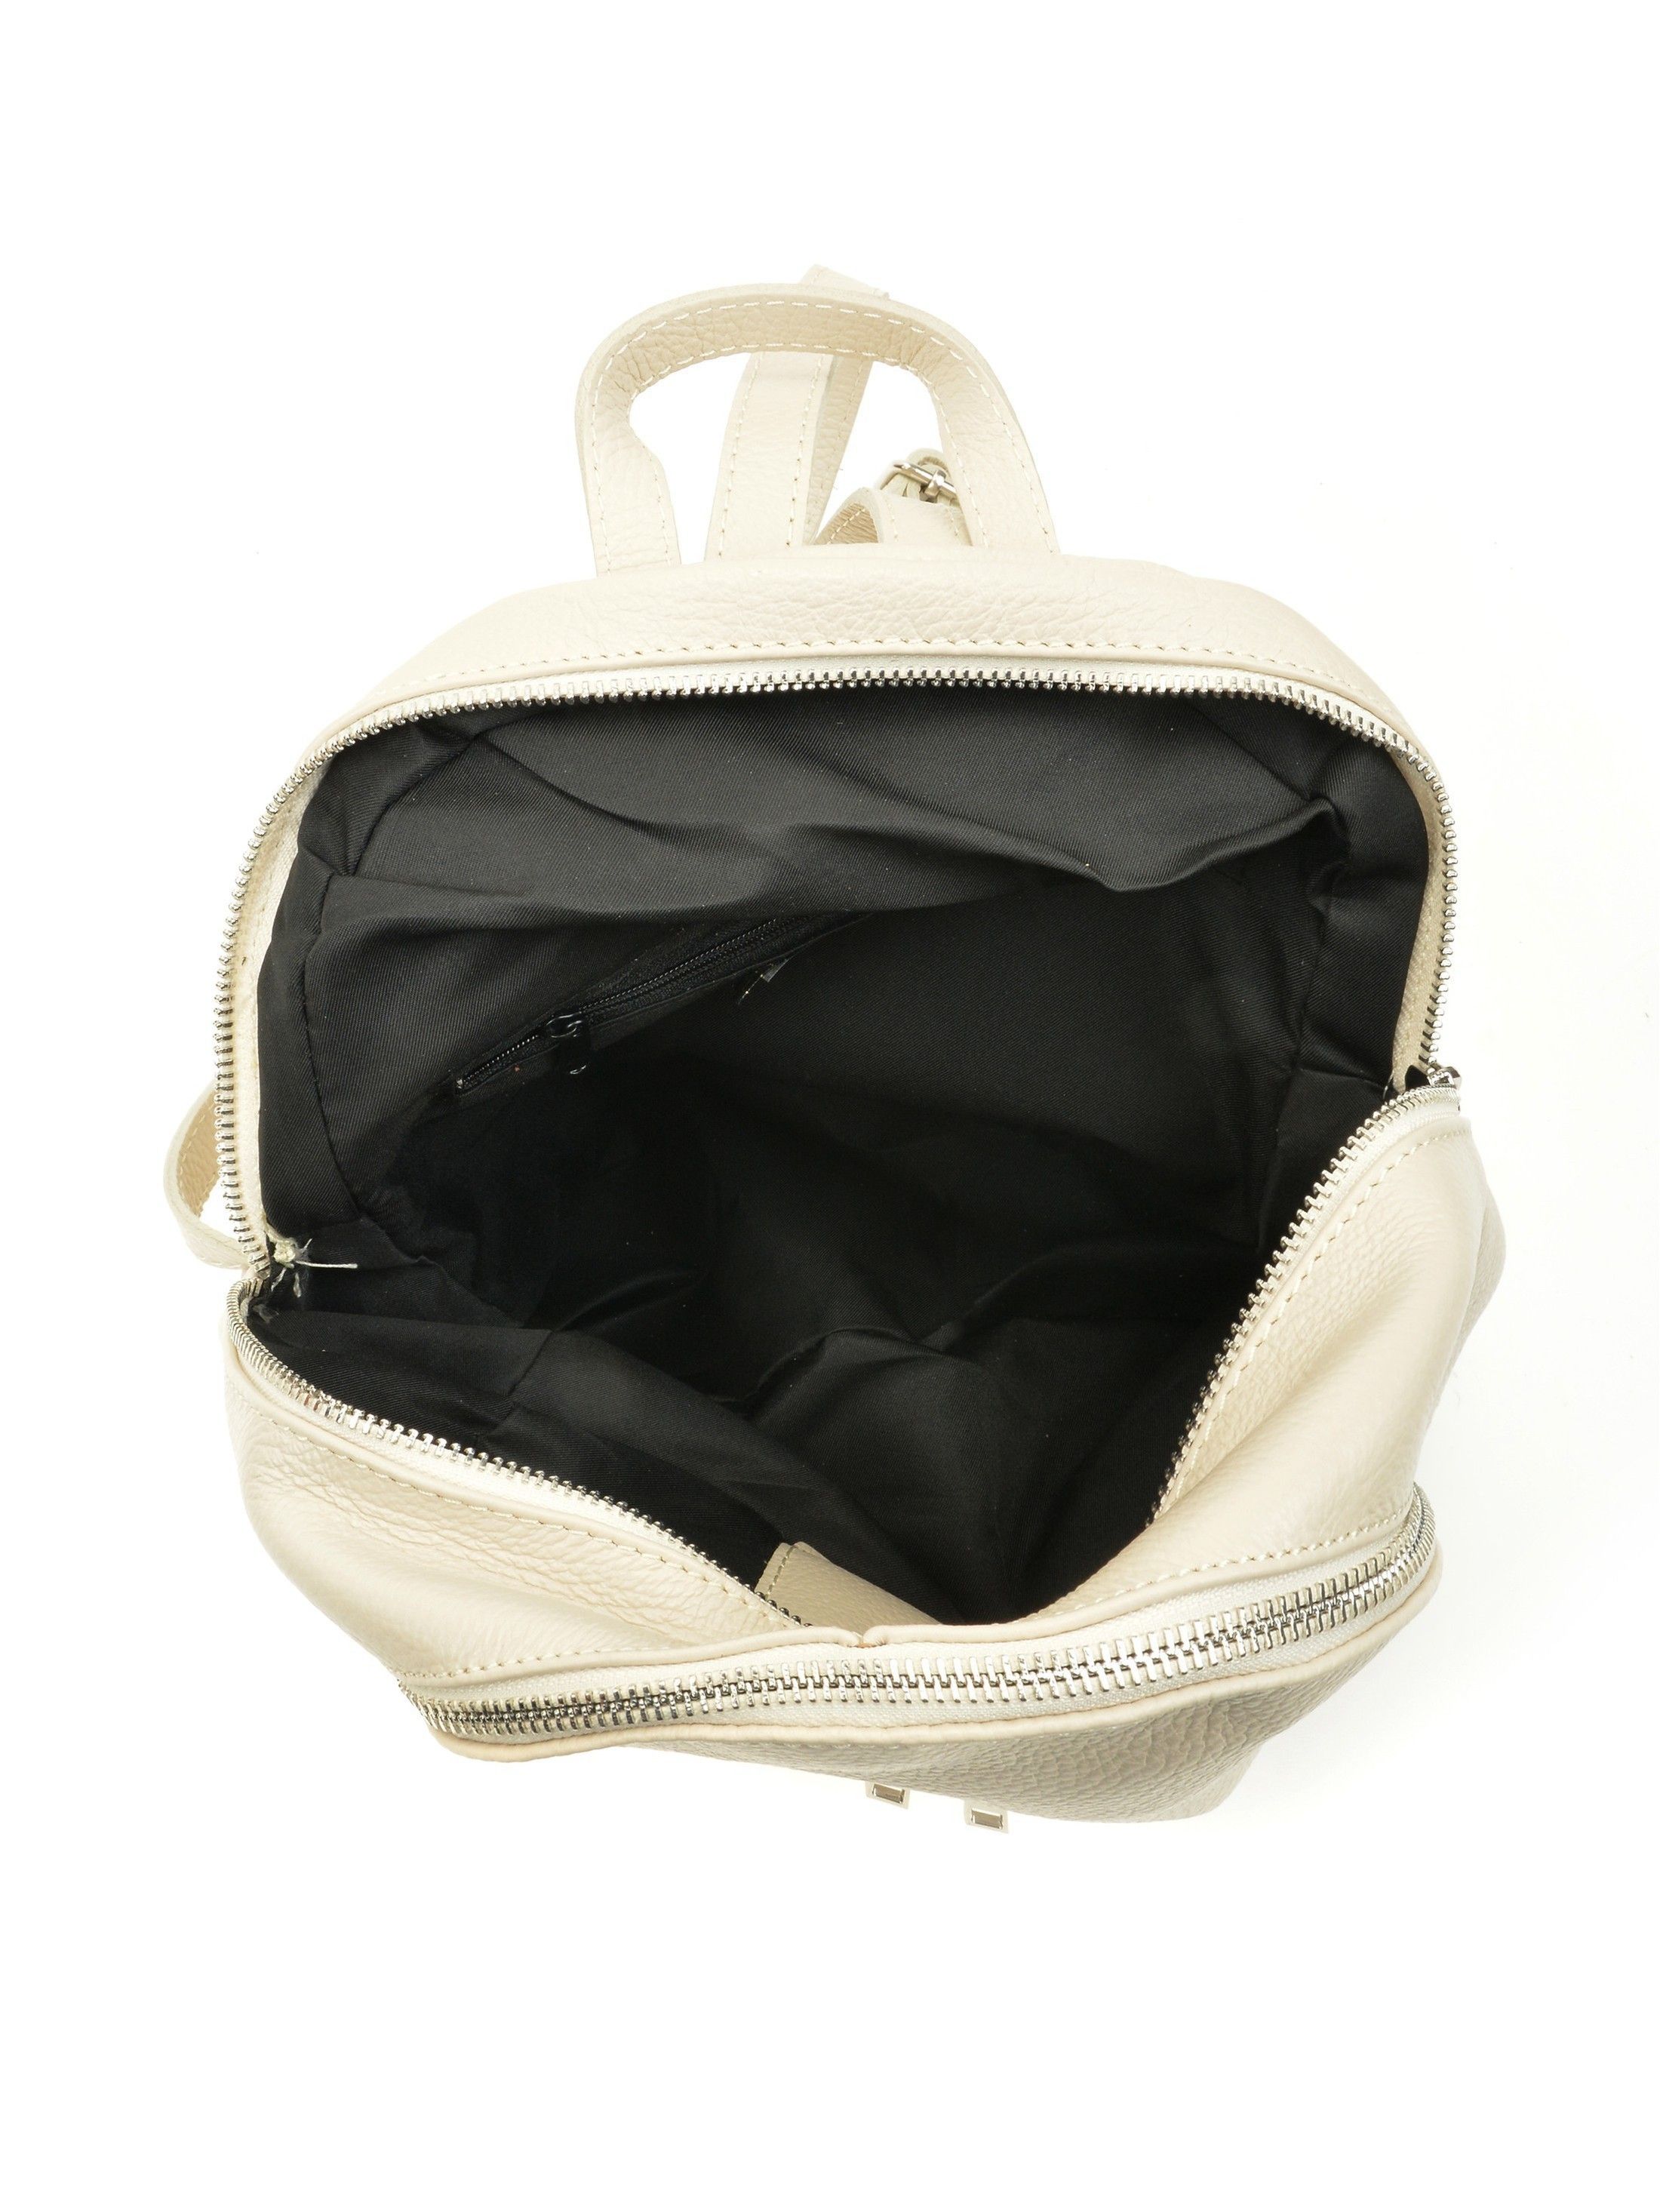 Backpack
100% cow leather
Double zip closure
Front zip compartment
Interior zip pocket
Dimensions (L): 29x30x13 cm
Handle: 23 cm non adjustable
Shoulder strap: 2x80 cm adjustable